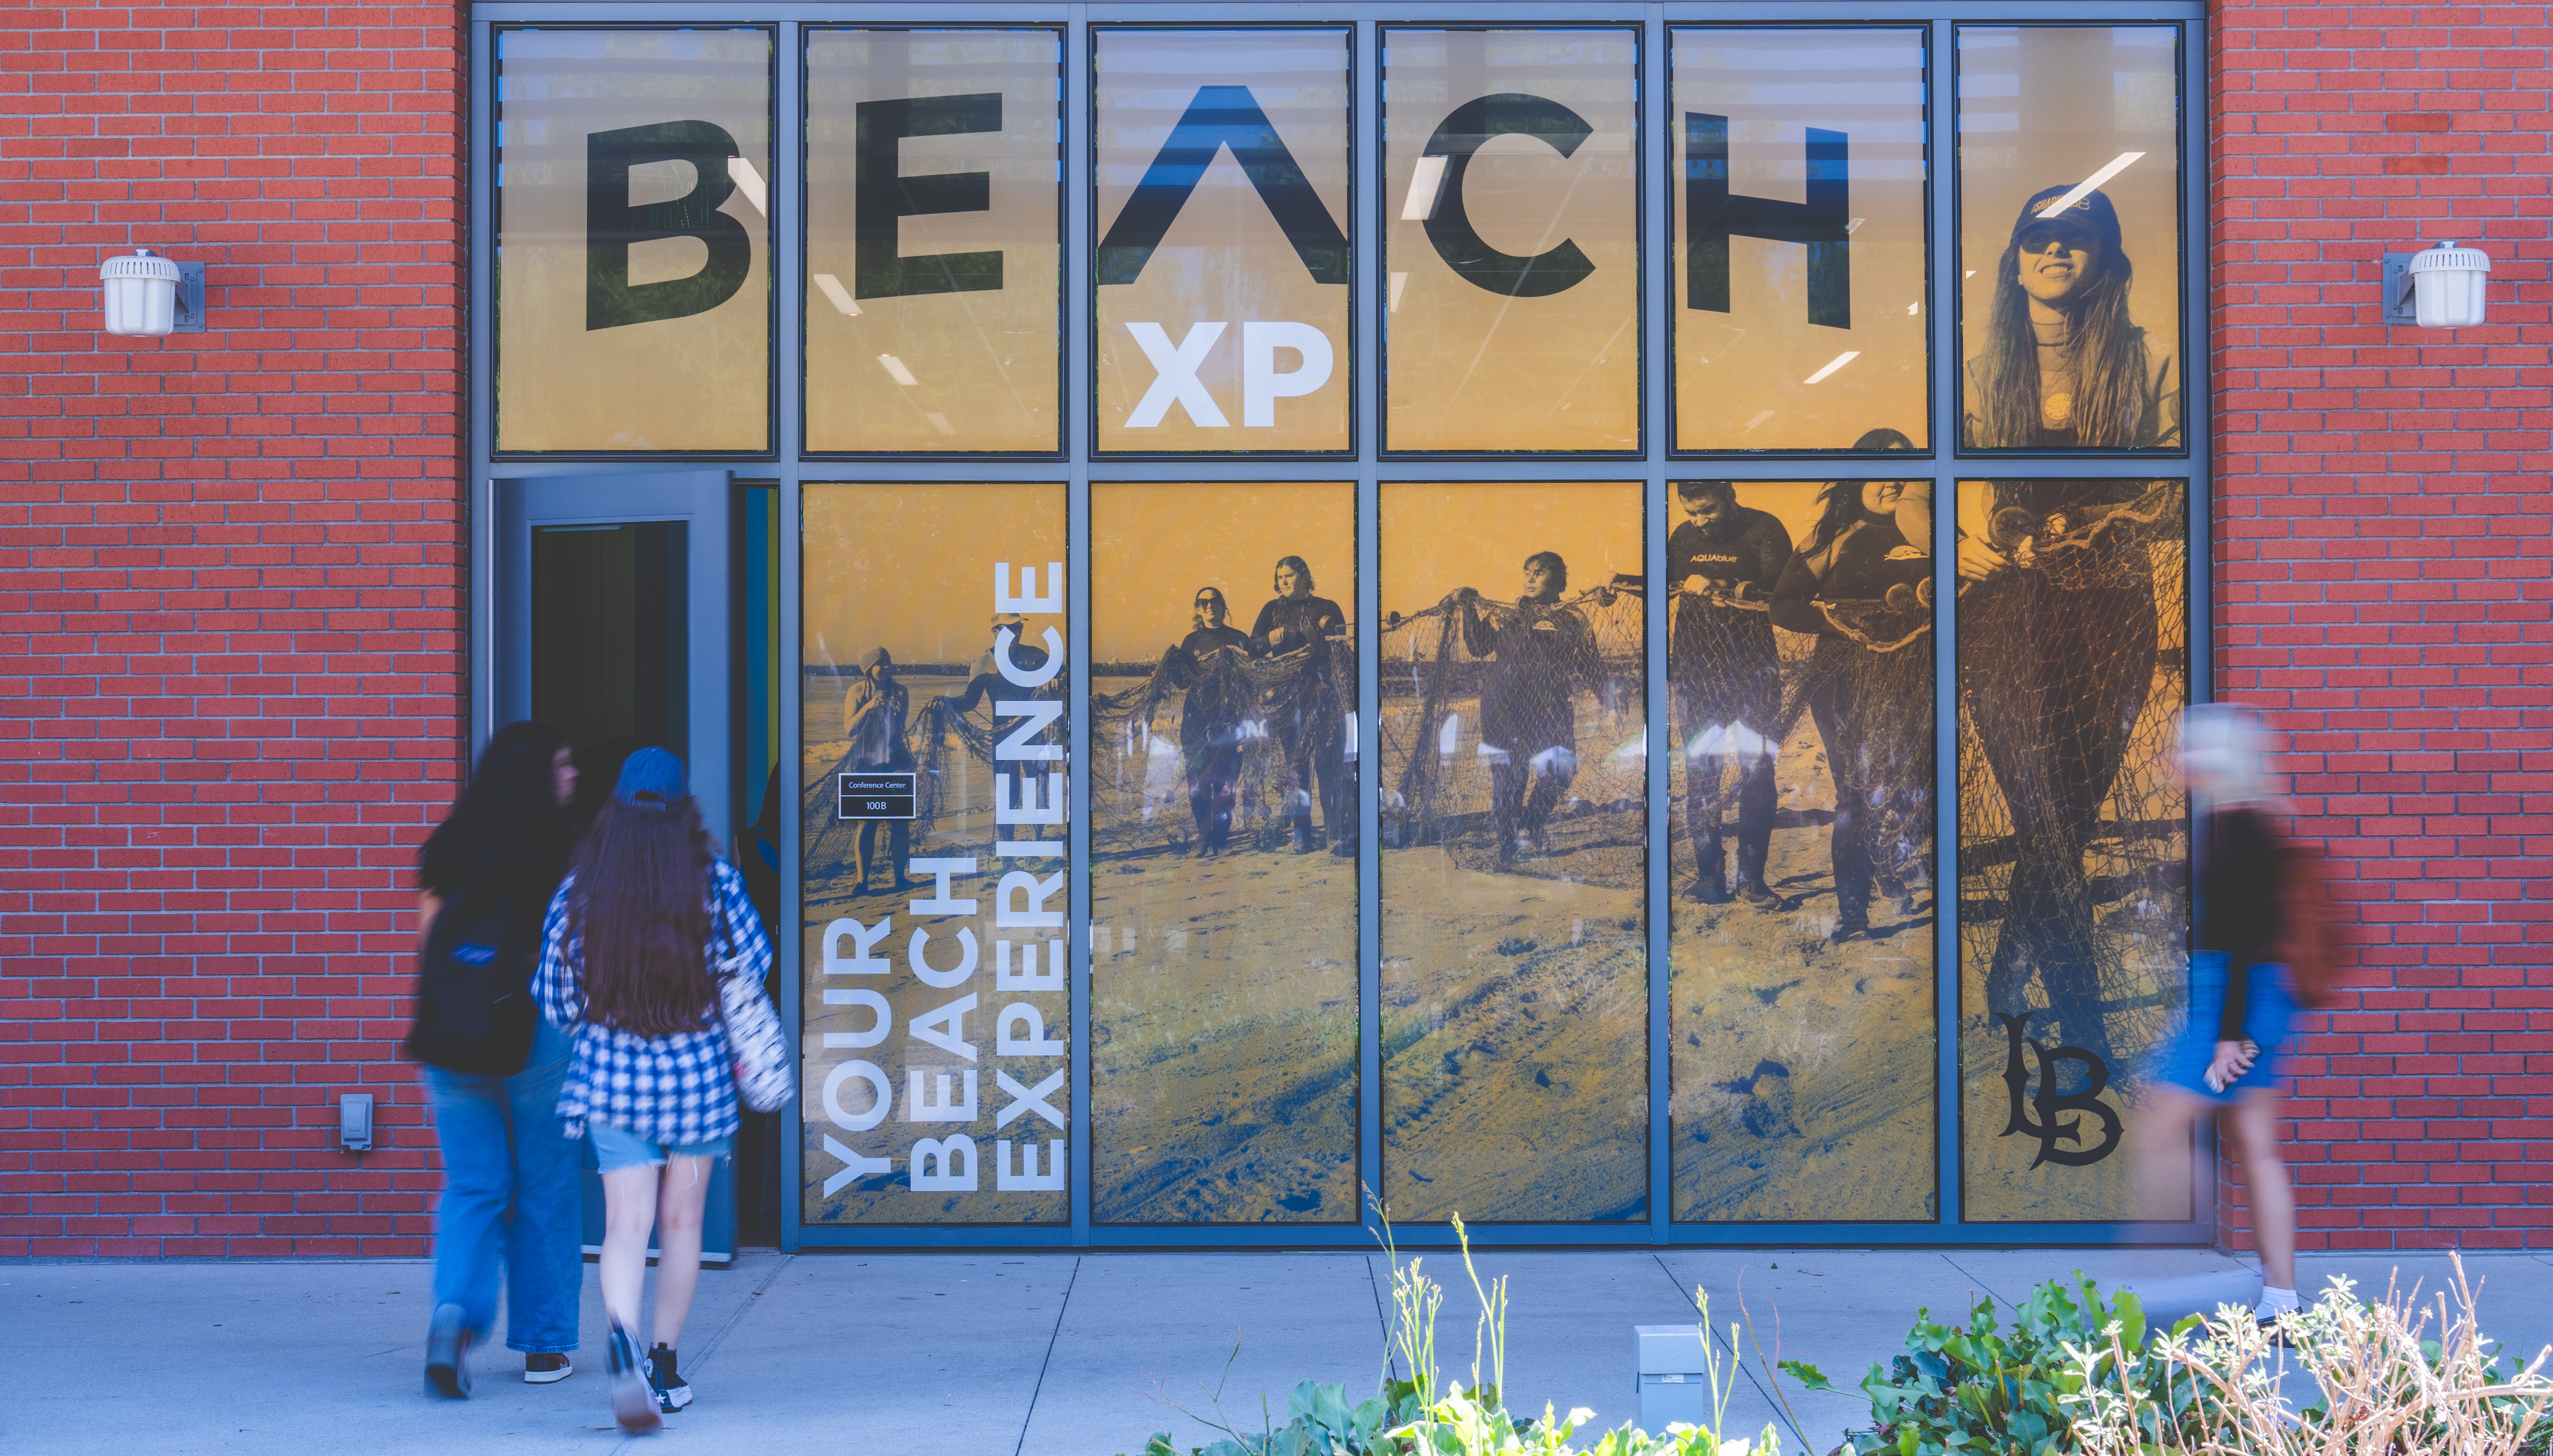 Students enter Beach XP class during first week of school.